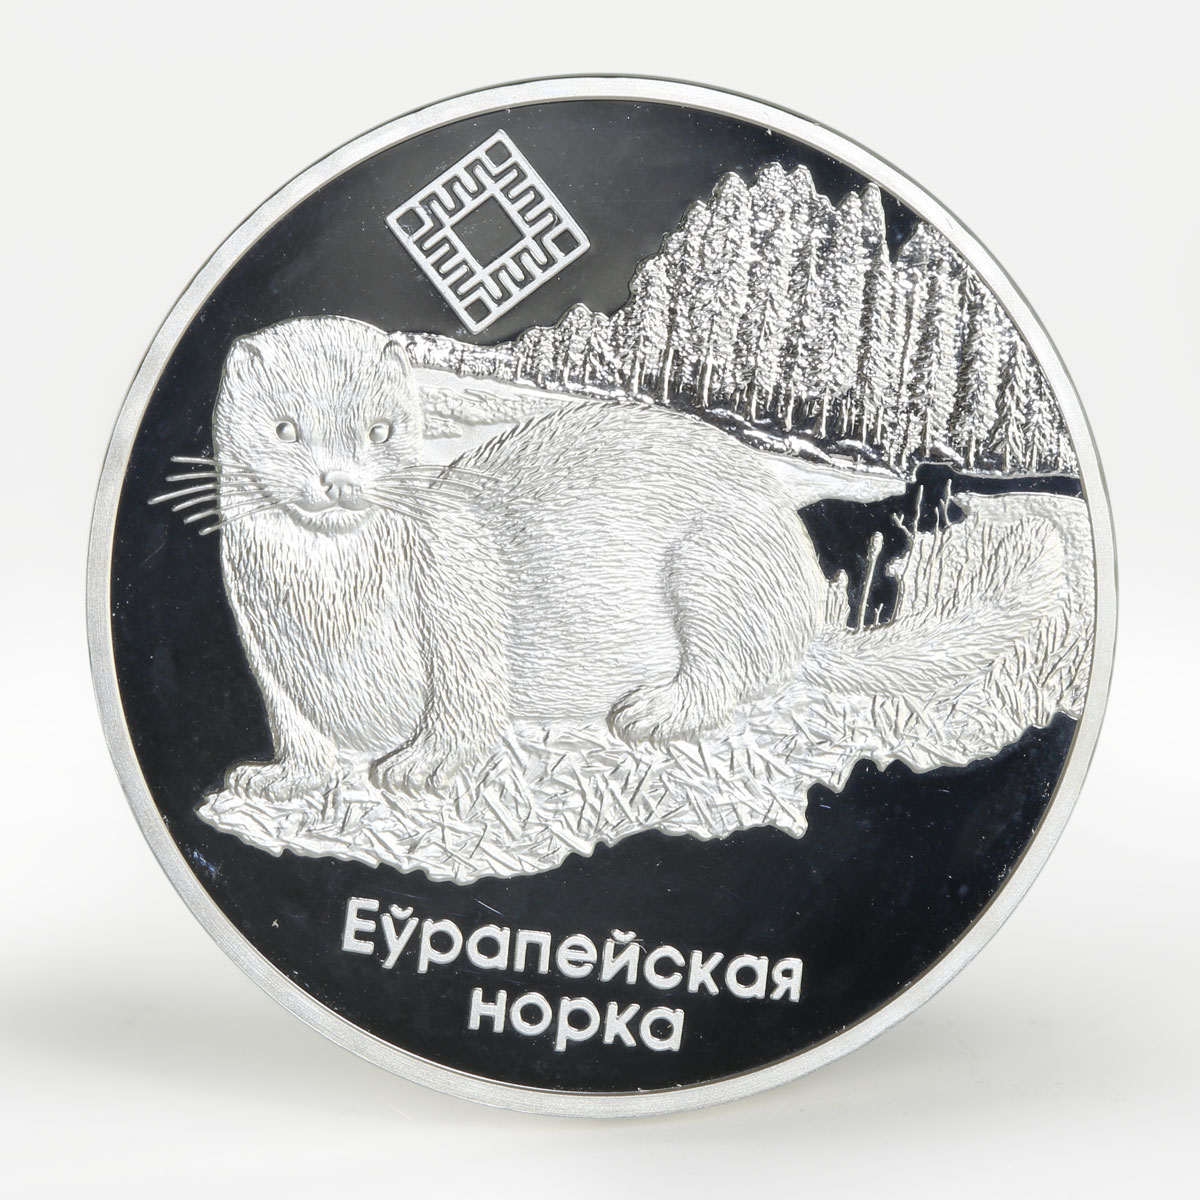 Belarus 20 rubles Chervony Bor mink proof silver coin 2006